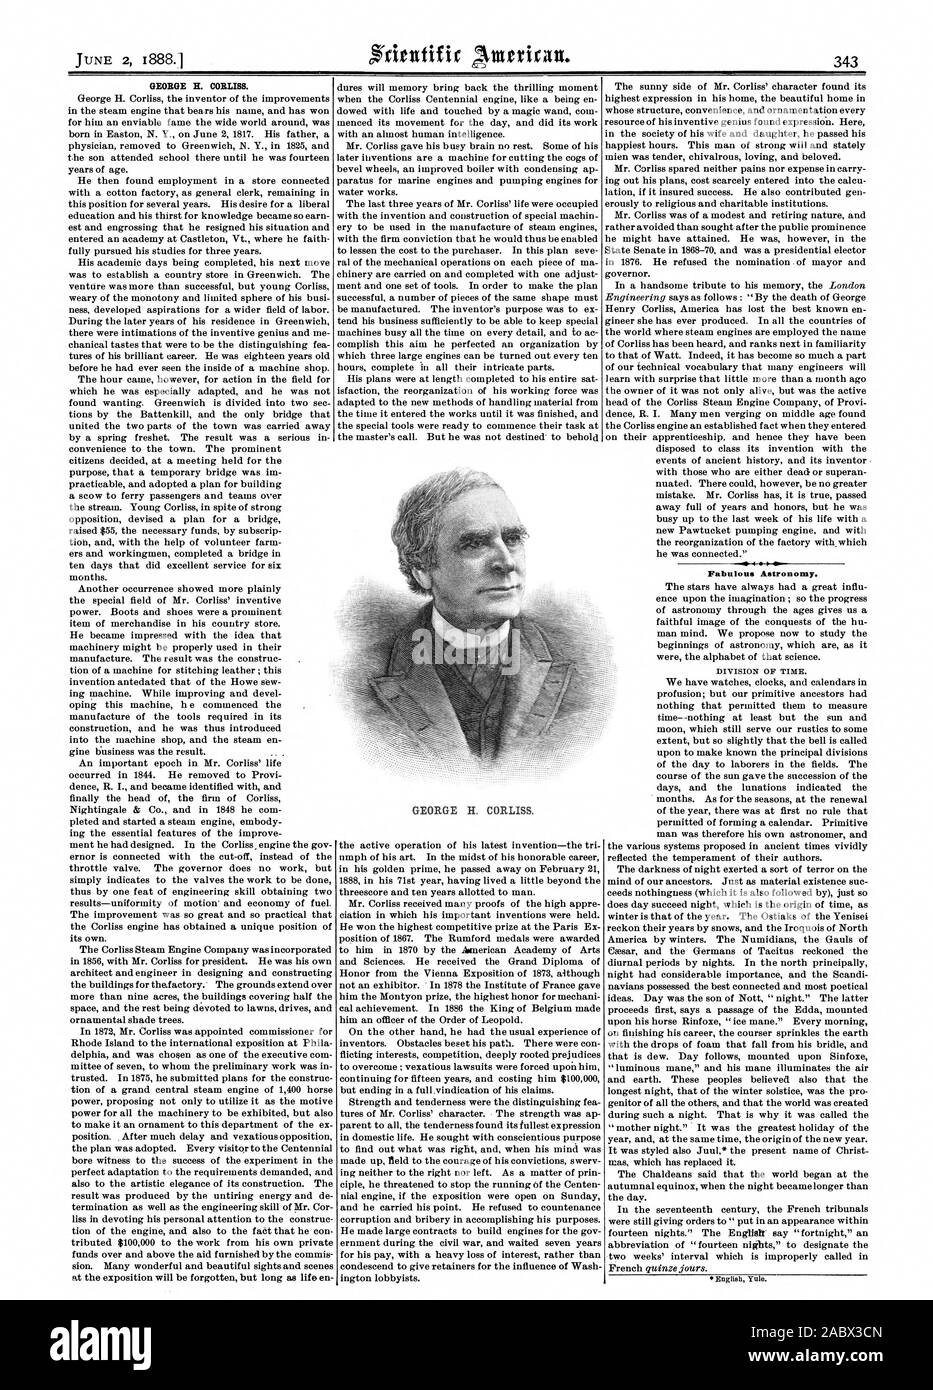 GEORGE H. CORLISS. Fabelhafte Astronomie. GEORGE H. CORLISS., Scientific American, 1888-06-02 Stockfoto